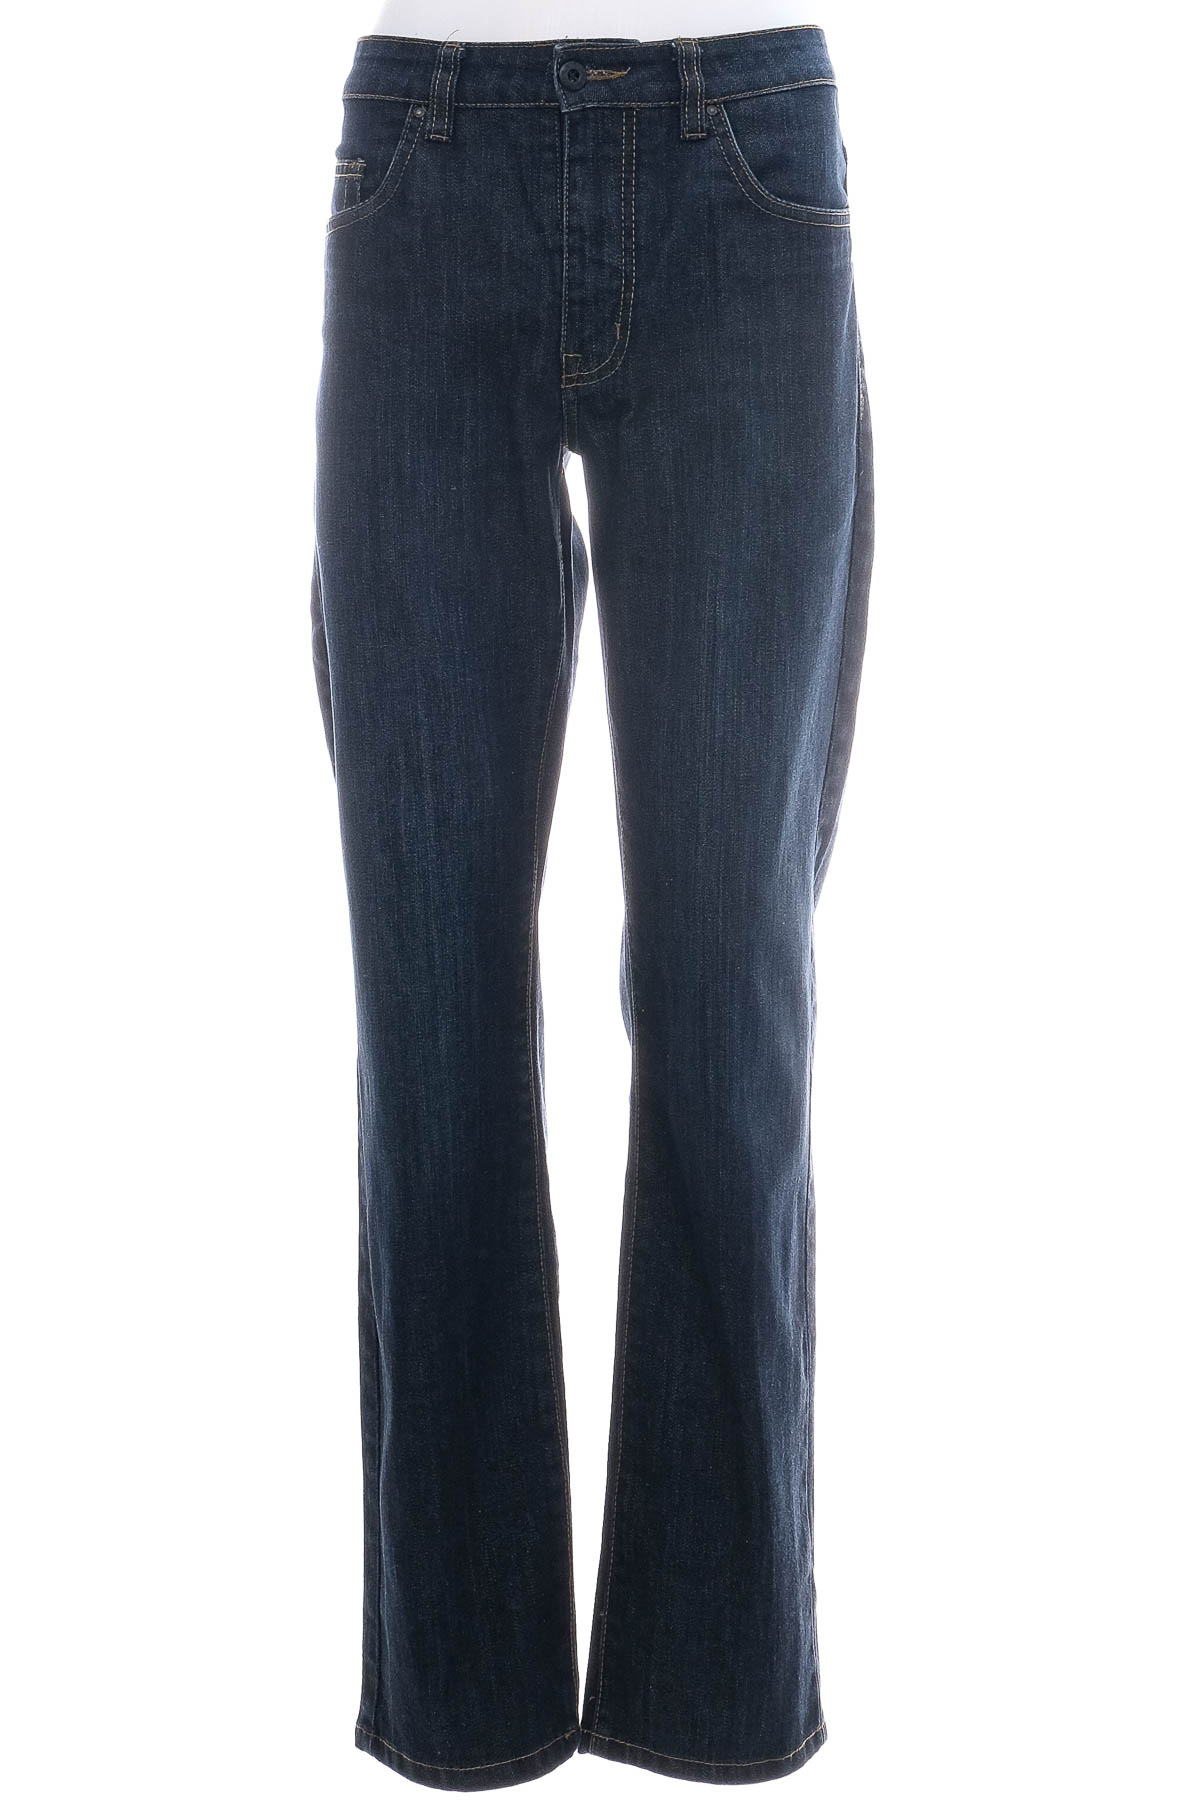 Men's jeans - TIM MOORE - 0